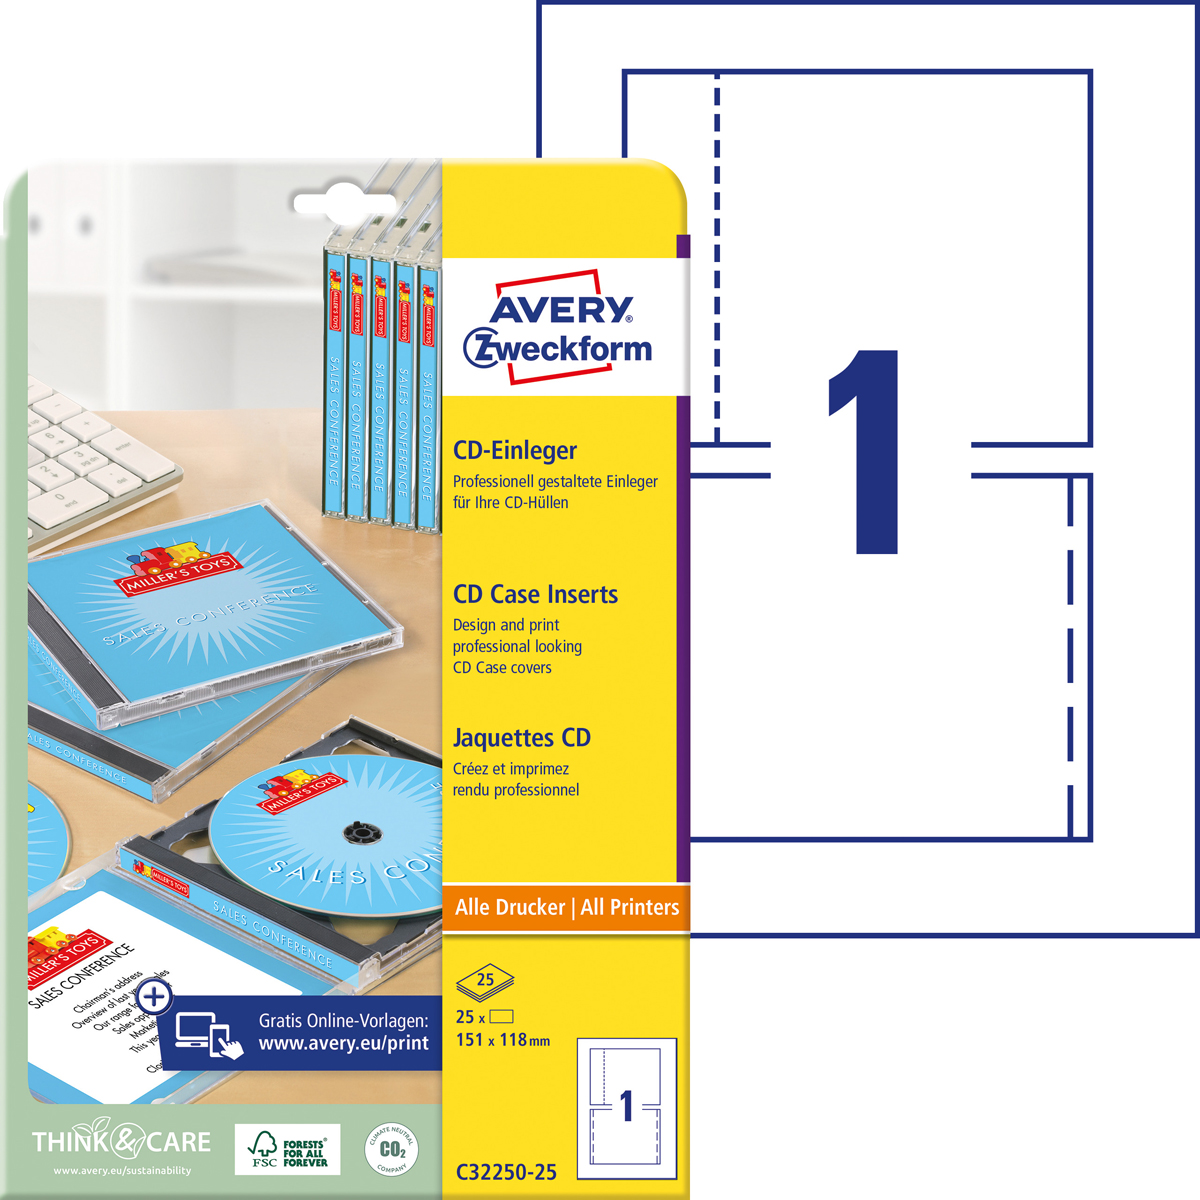 Avery Zweckform C32250-25 CD-Einleger, 151 x 118, mm, CDs, 25 Bogen/25 Stück, weiß